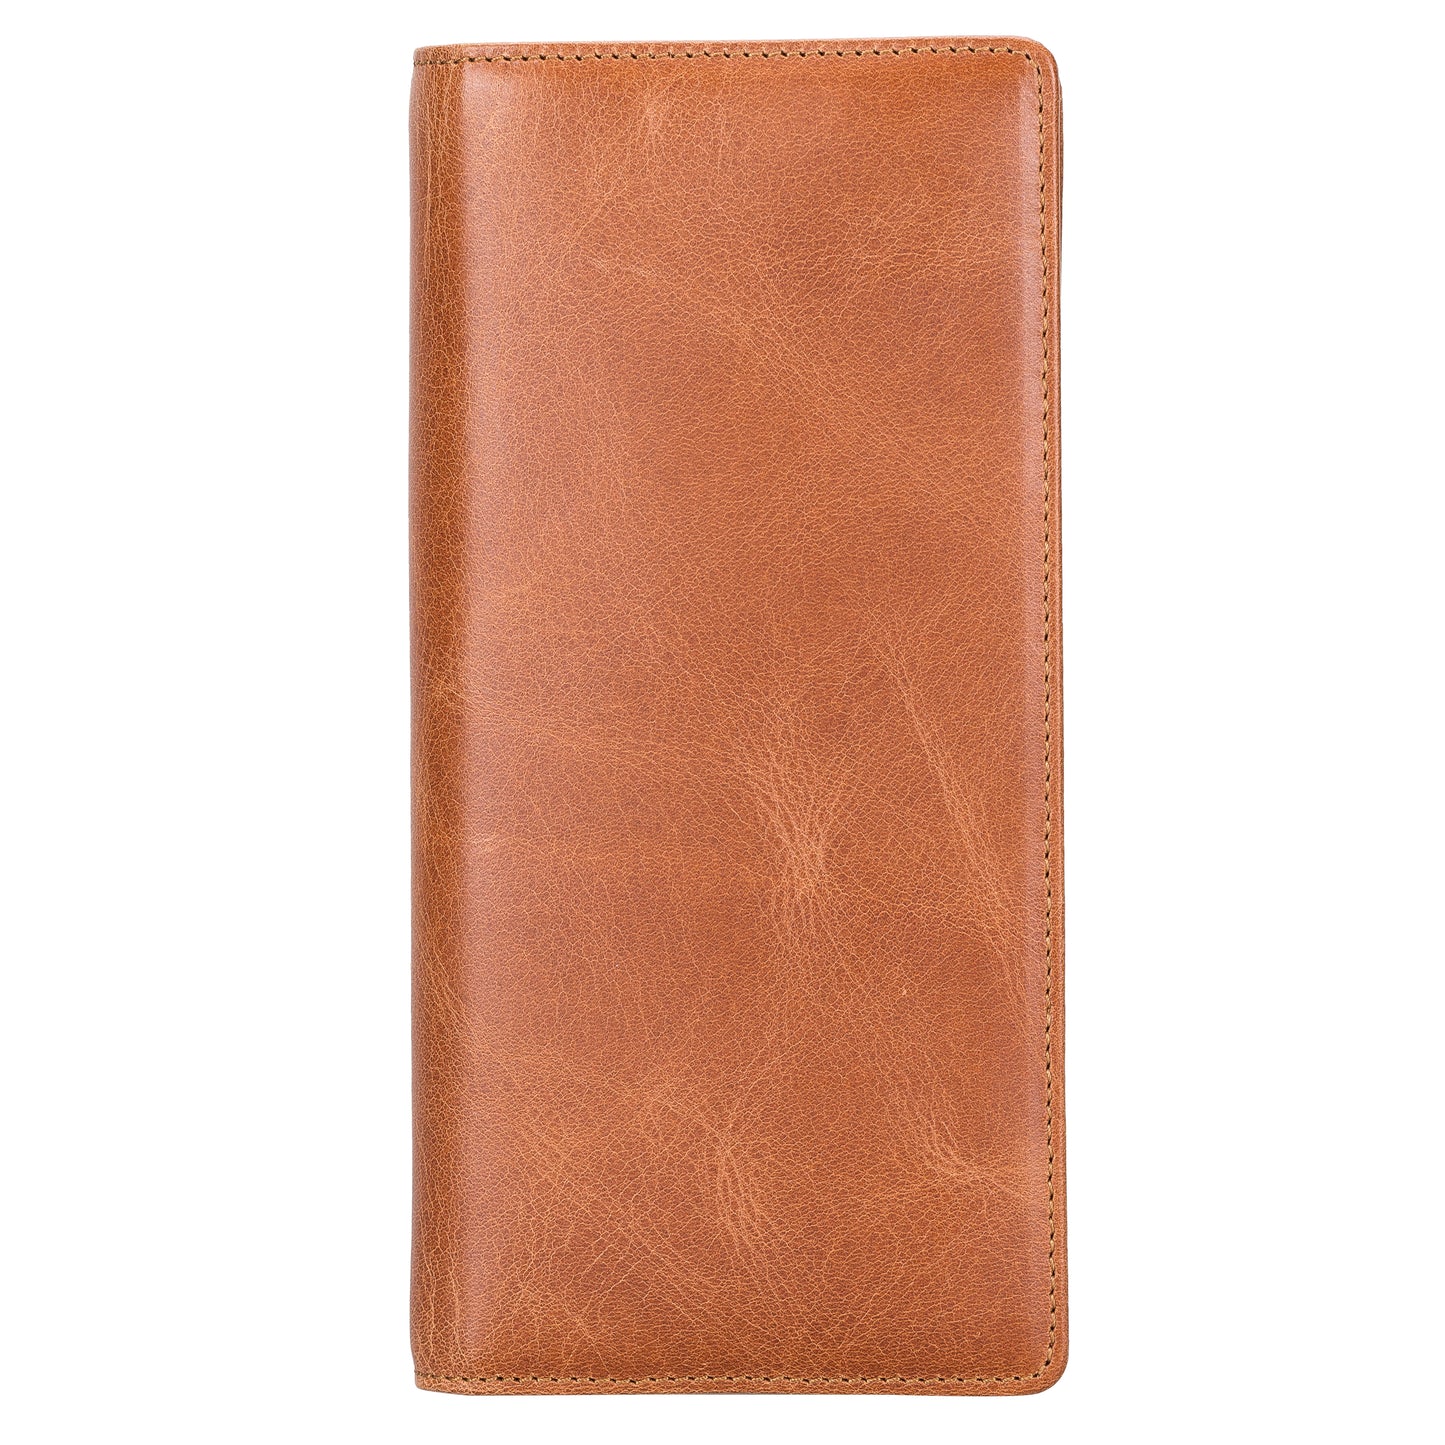 Basel Leather Women Wallet - Brown